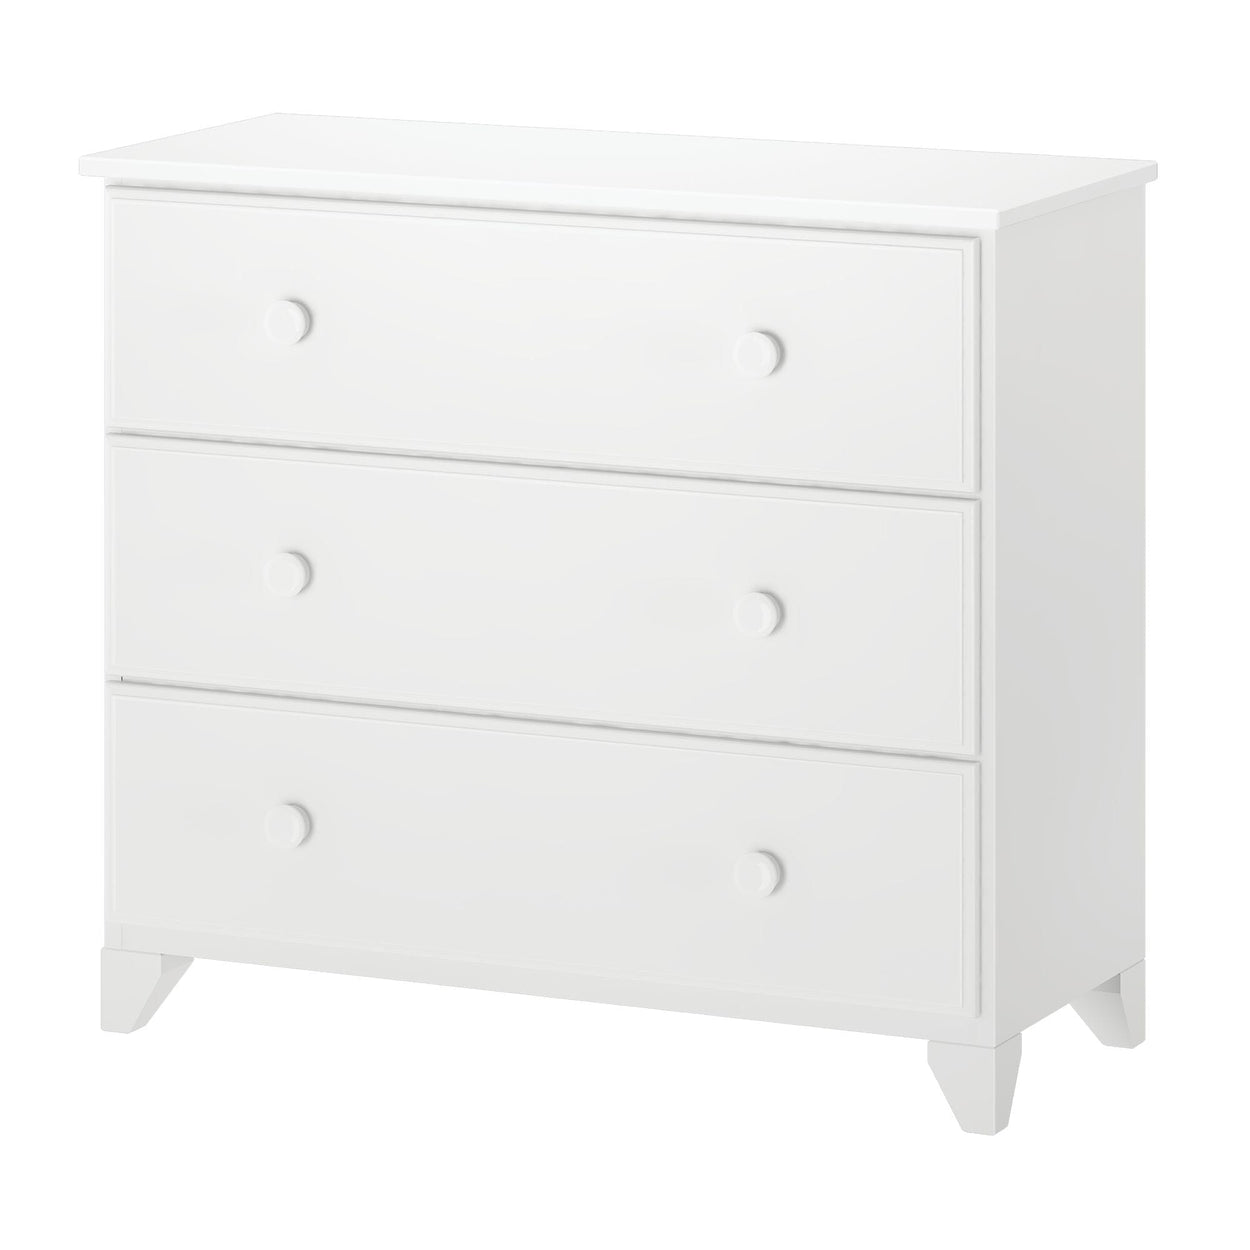 180013-002 : Furniture 3-Drawer Dresser, White